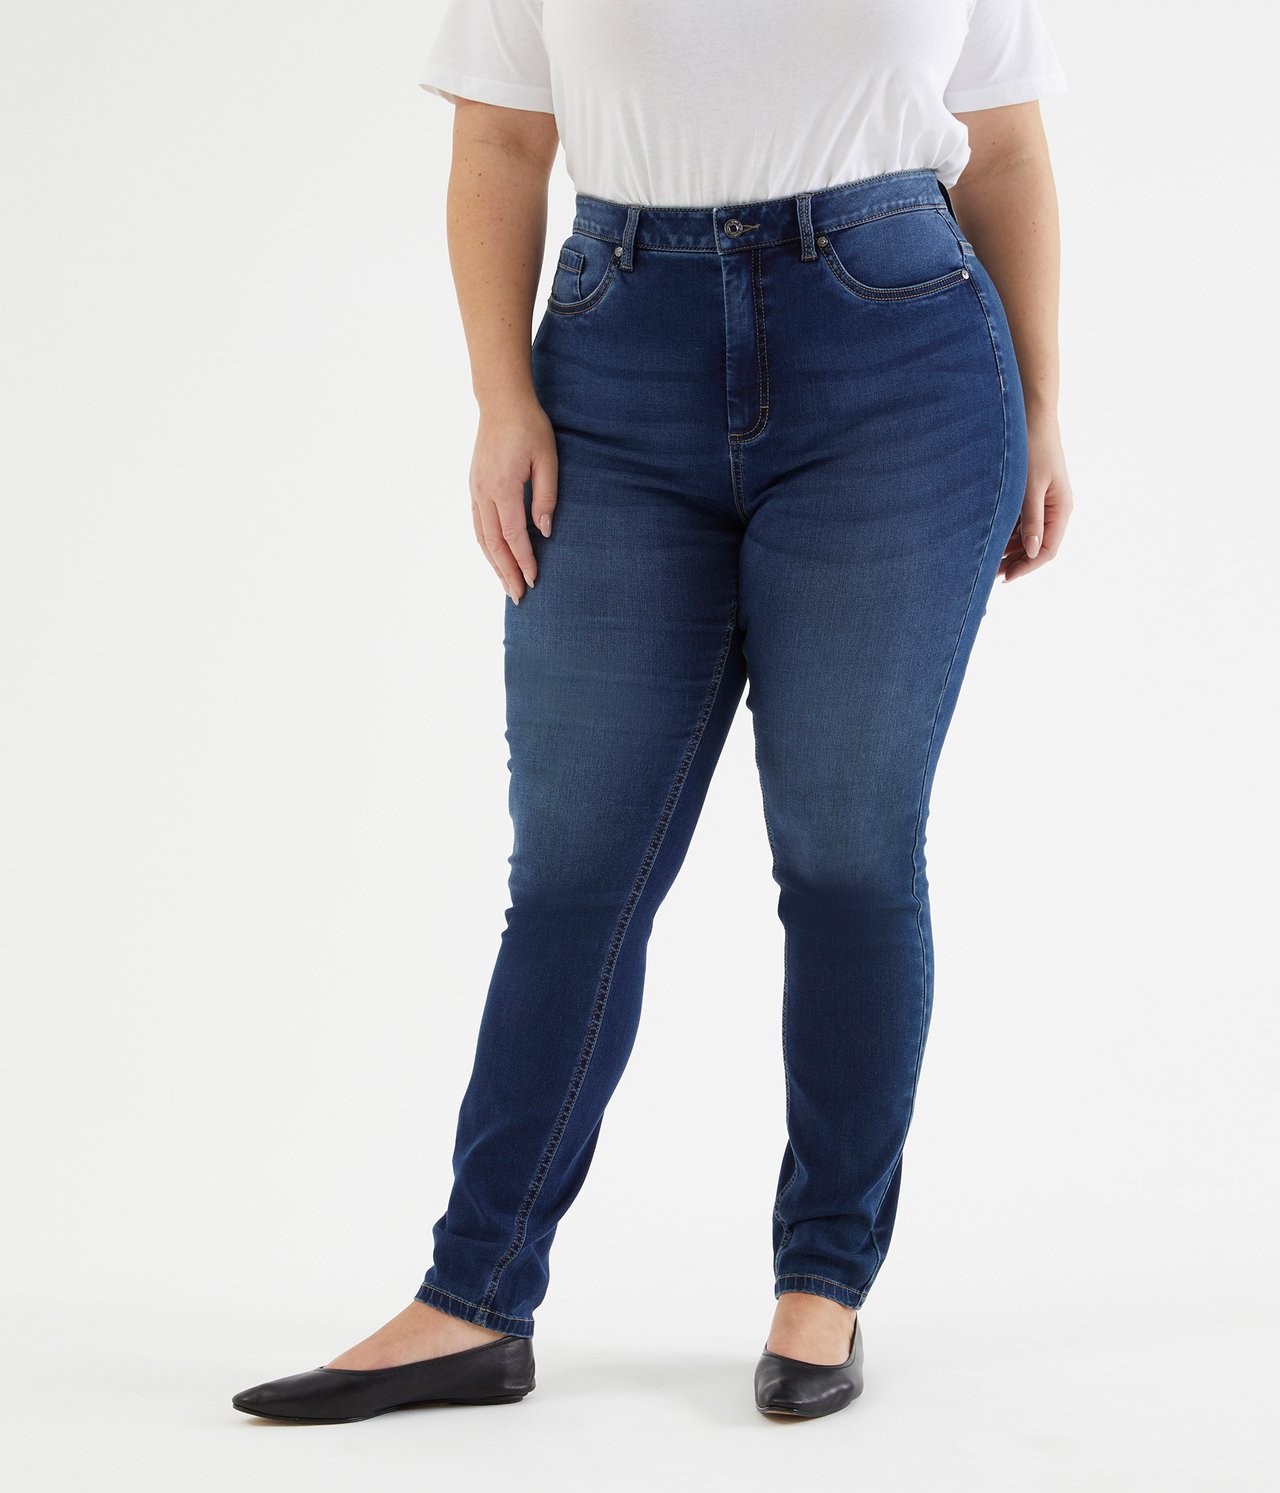 Ebba slim jeans extra long leg - Mörk denim - 3